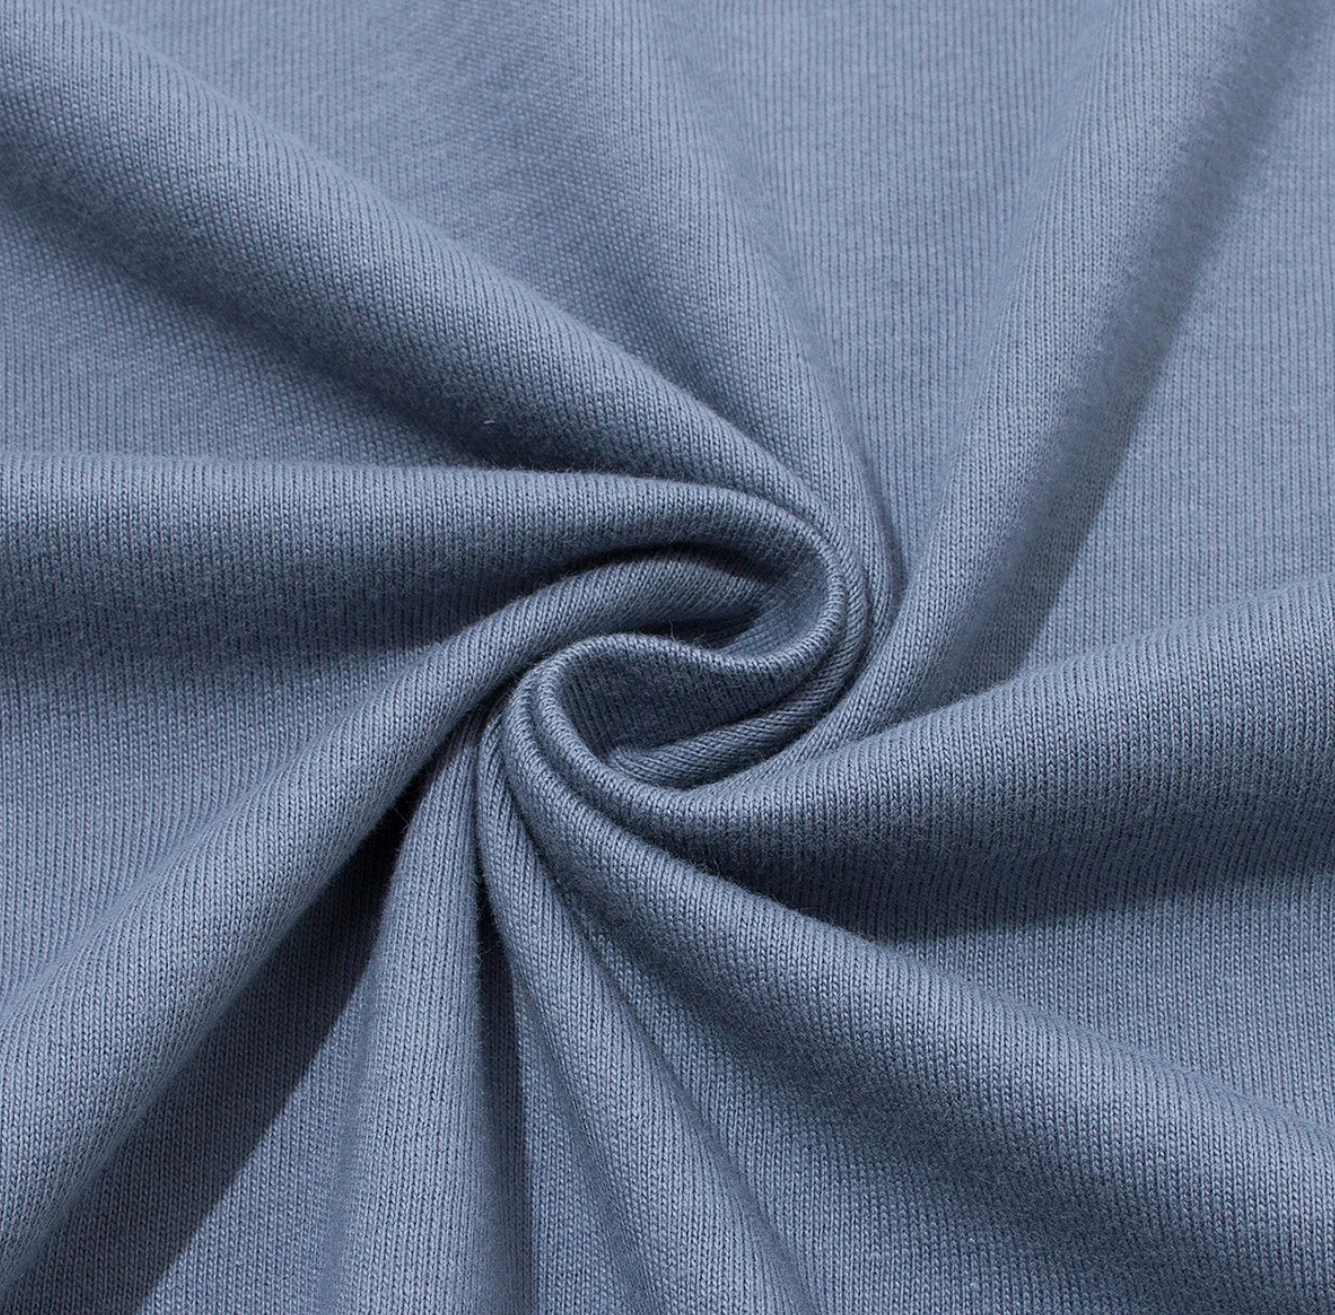 Fabric close up